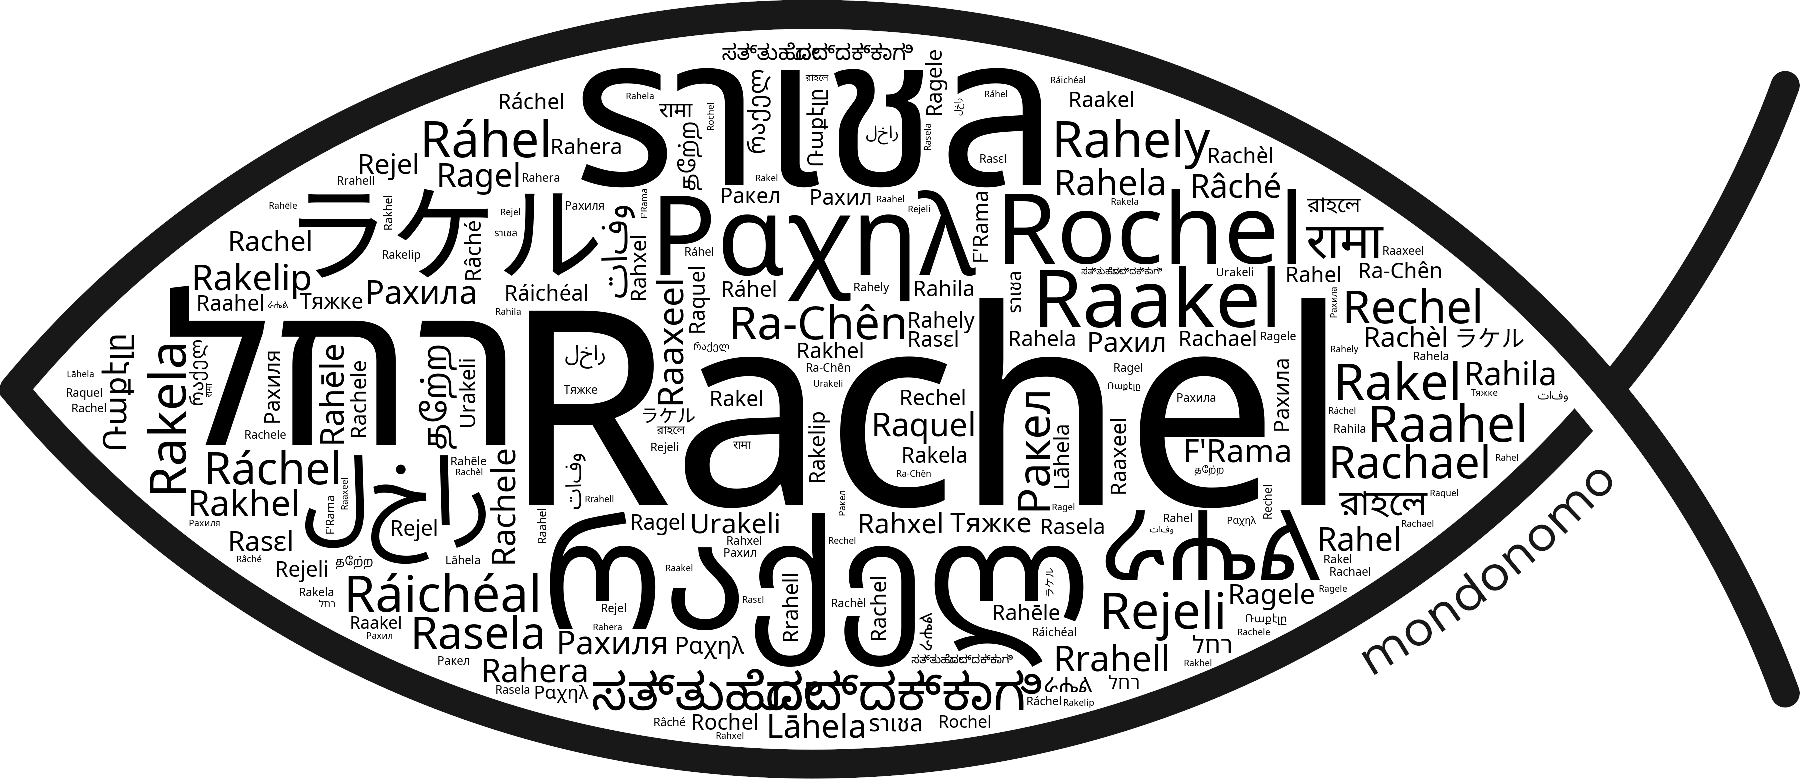 Name Rachel in the world's Bibles